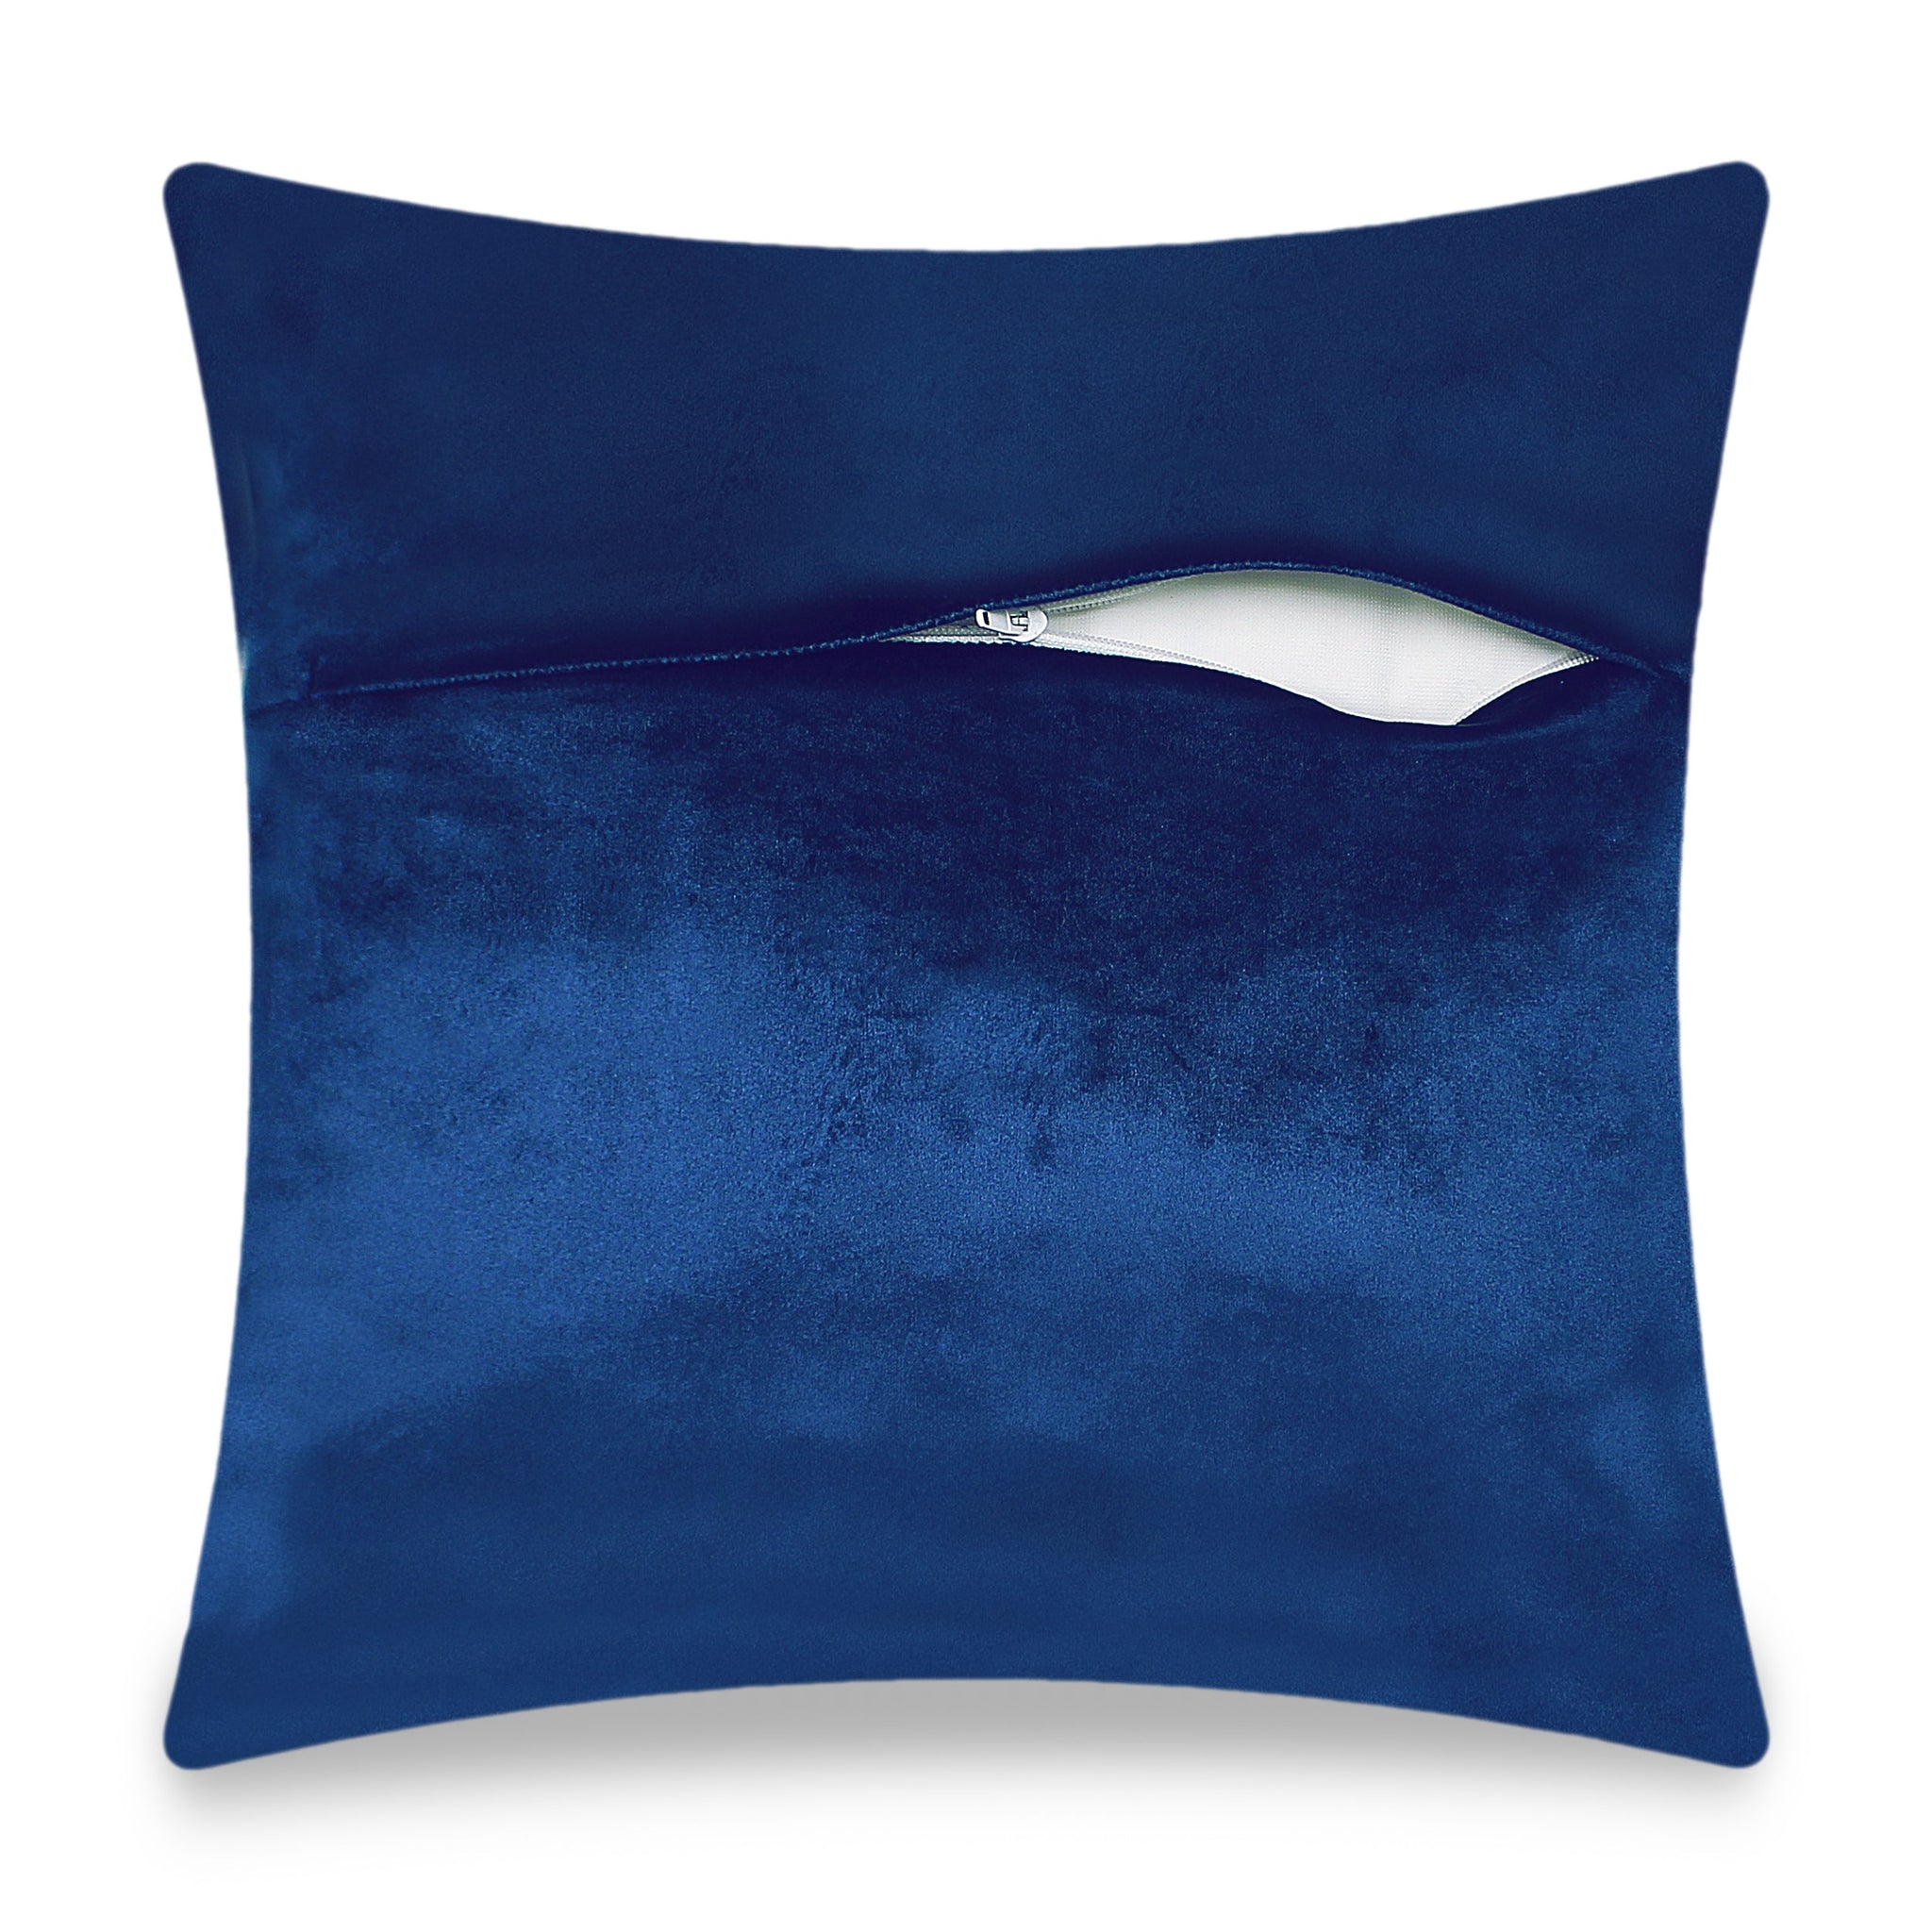 Velvet Cushion Cover Ottoman Floral Decorative Pillowcase Home Decor Throw Pillow for Sofa Chair Living Room 45x45 cm 18x18 In